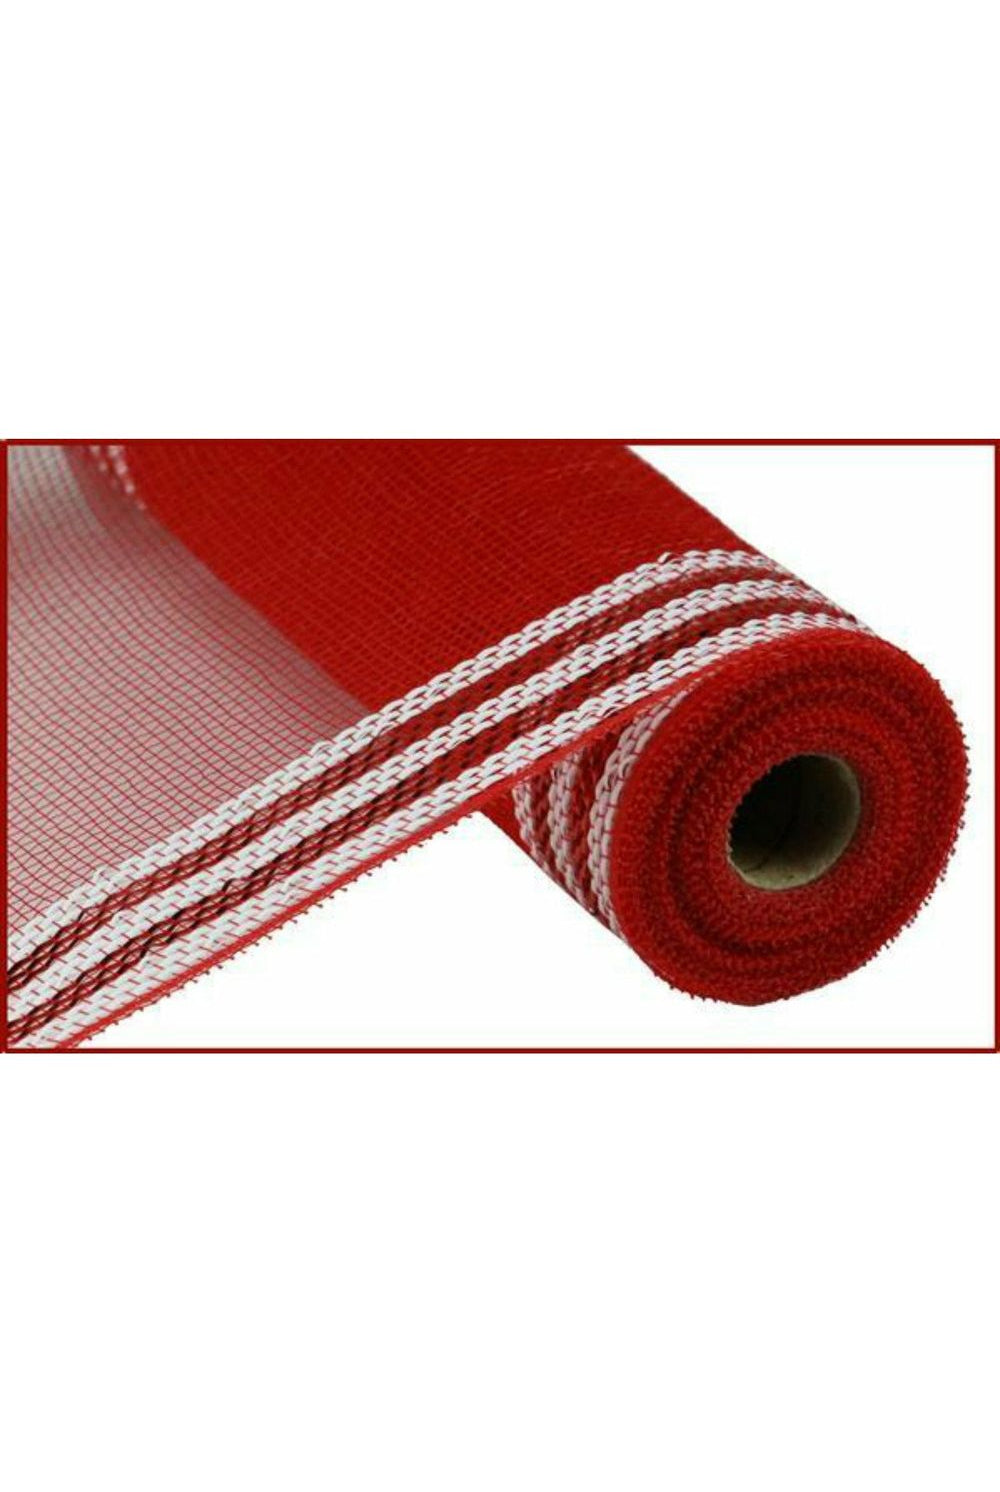 Shop For 10.5" Border Stripe Metallic Mesh: Red/White (10 Yards) RY850349